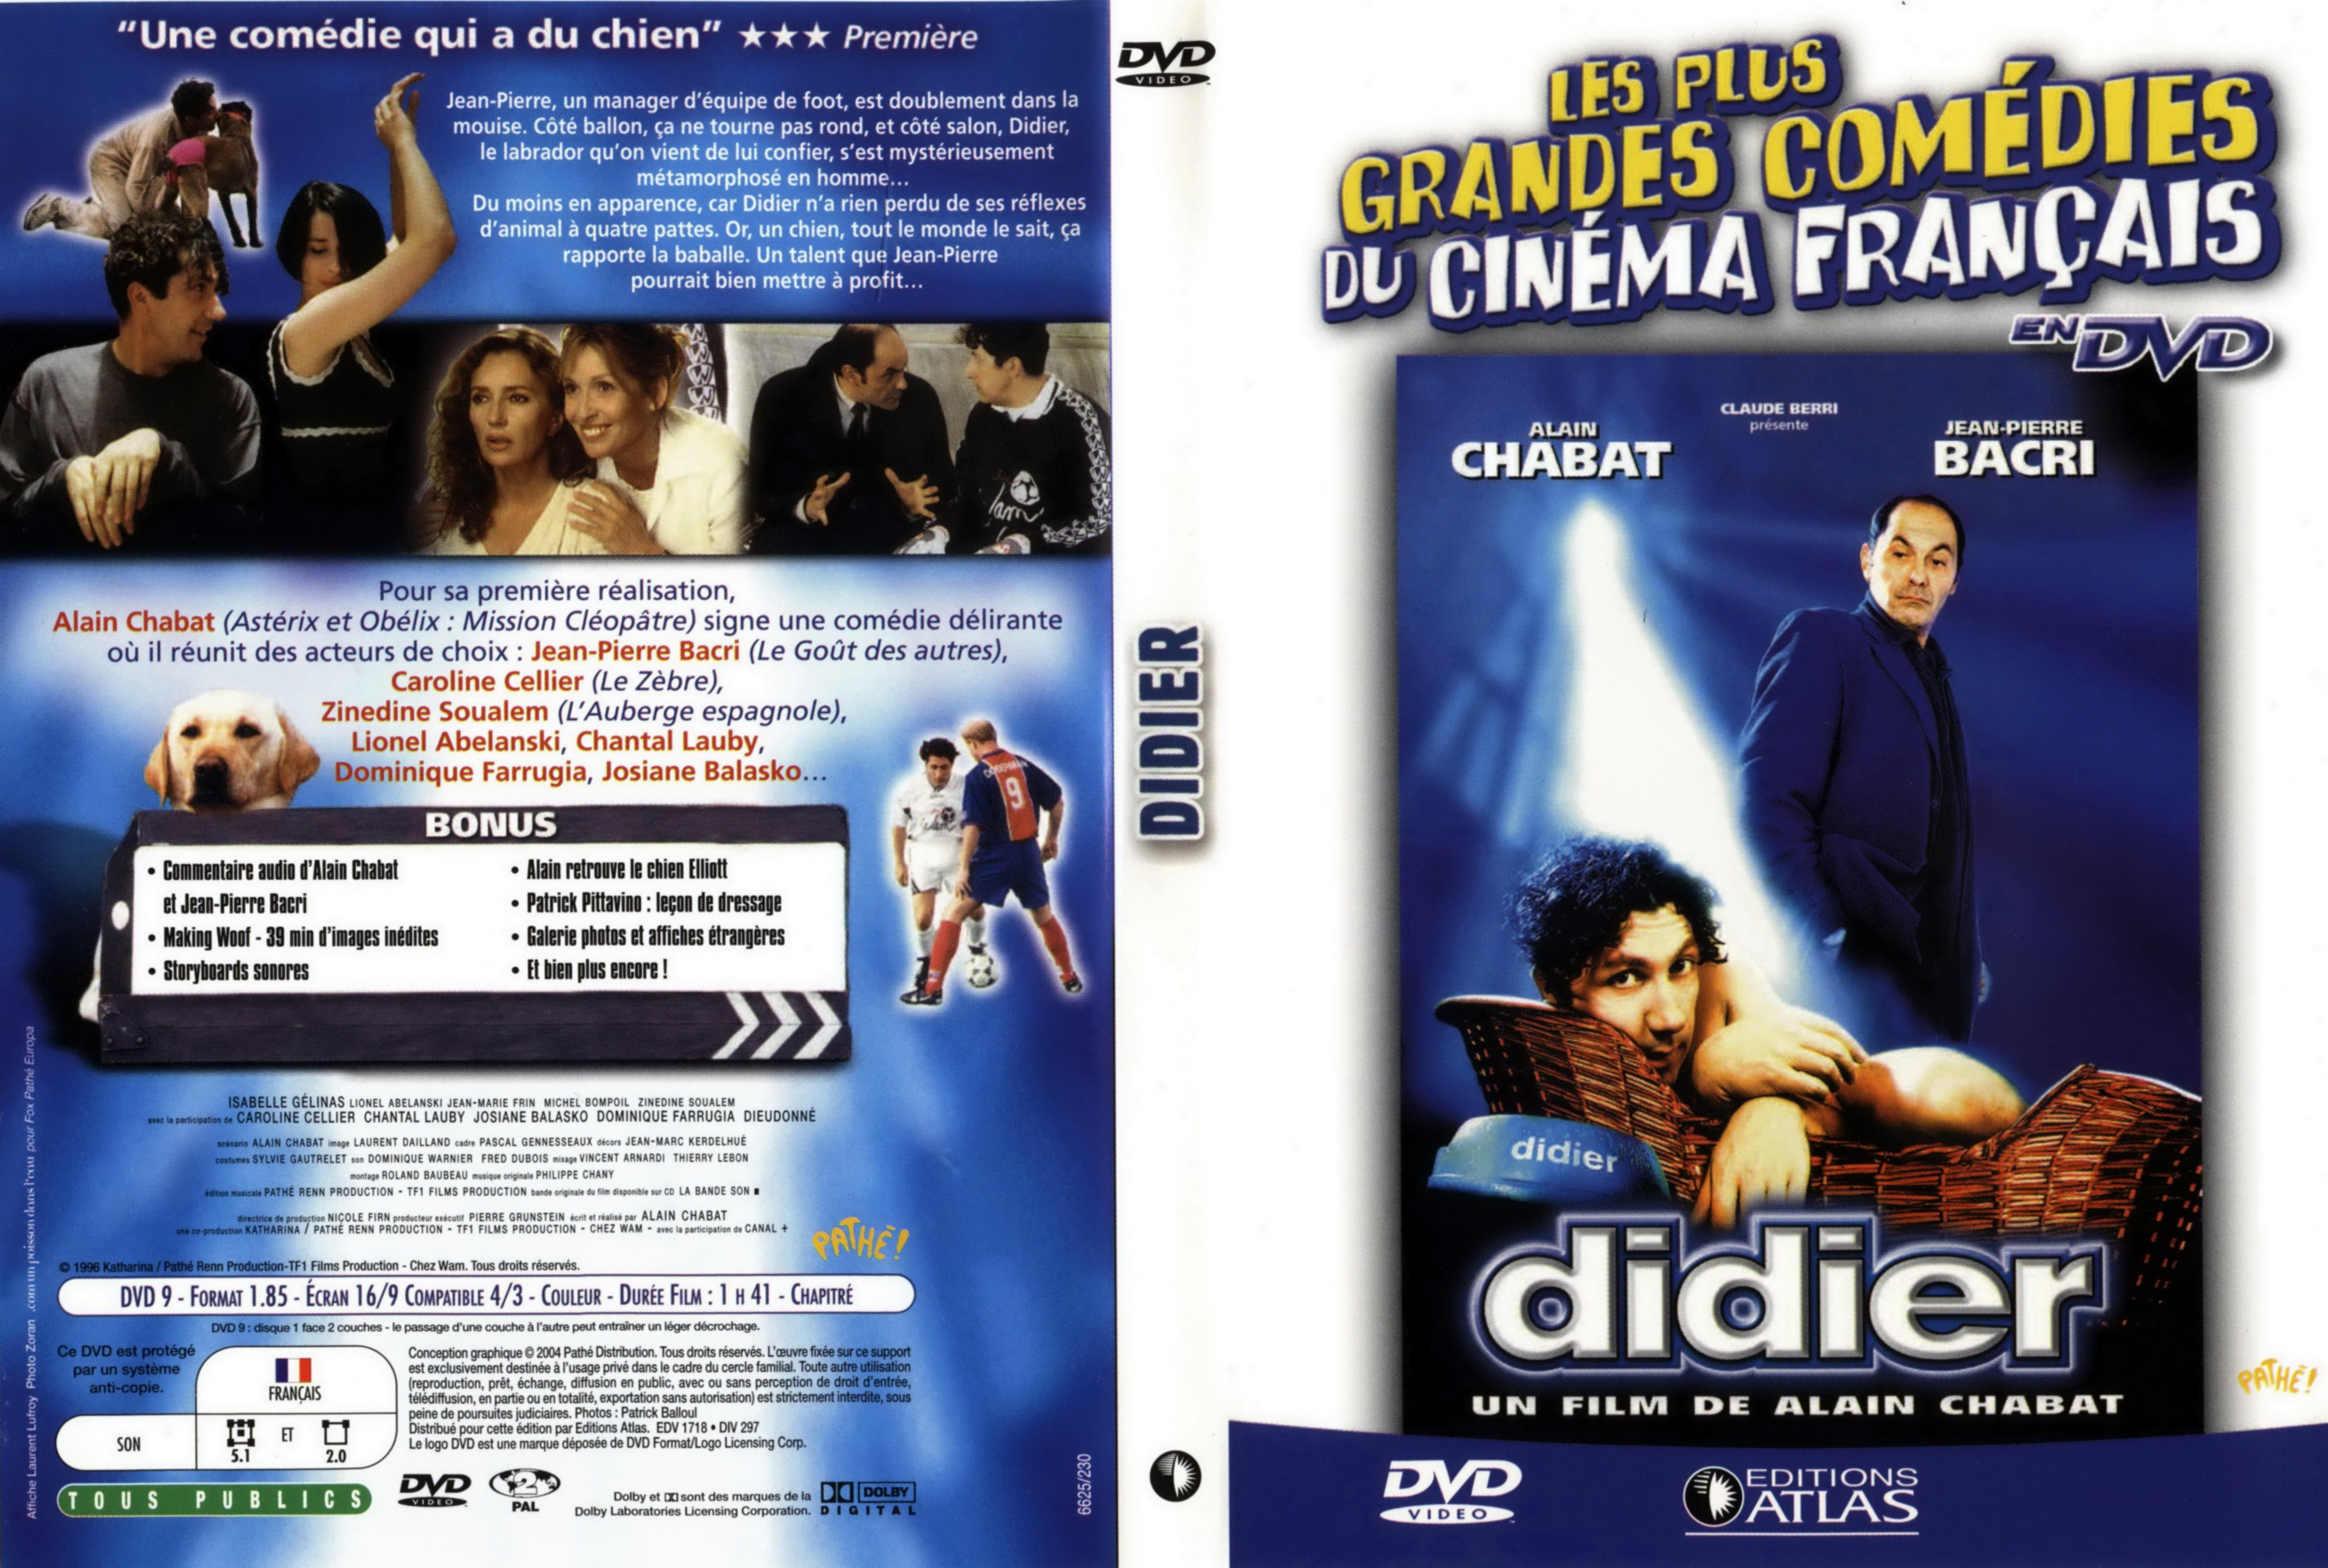 Jaquette DVD Didier v2